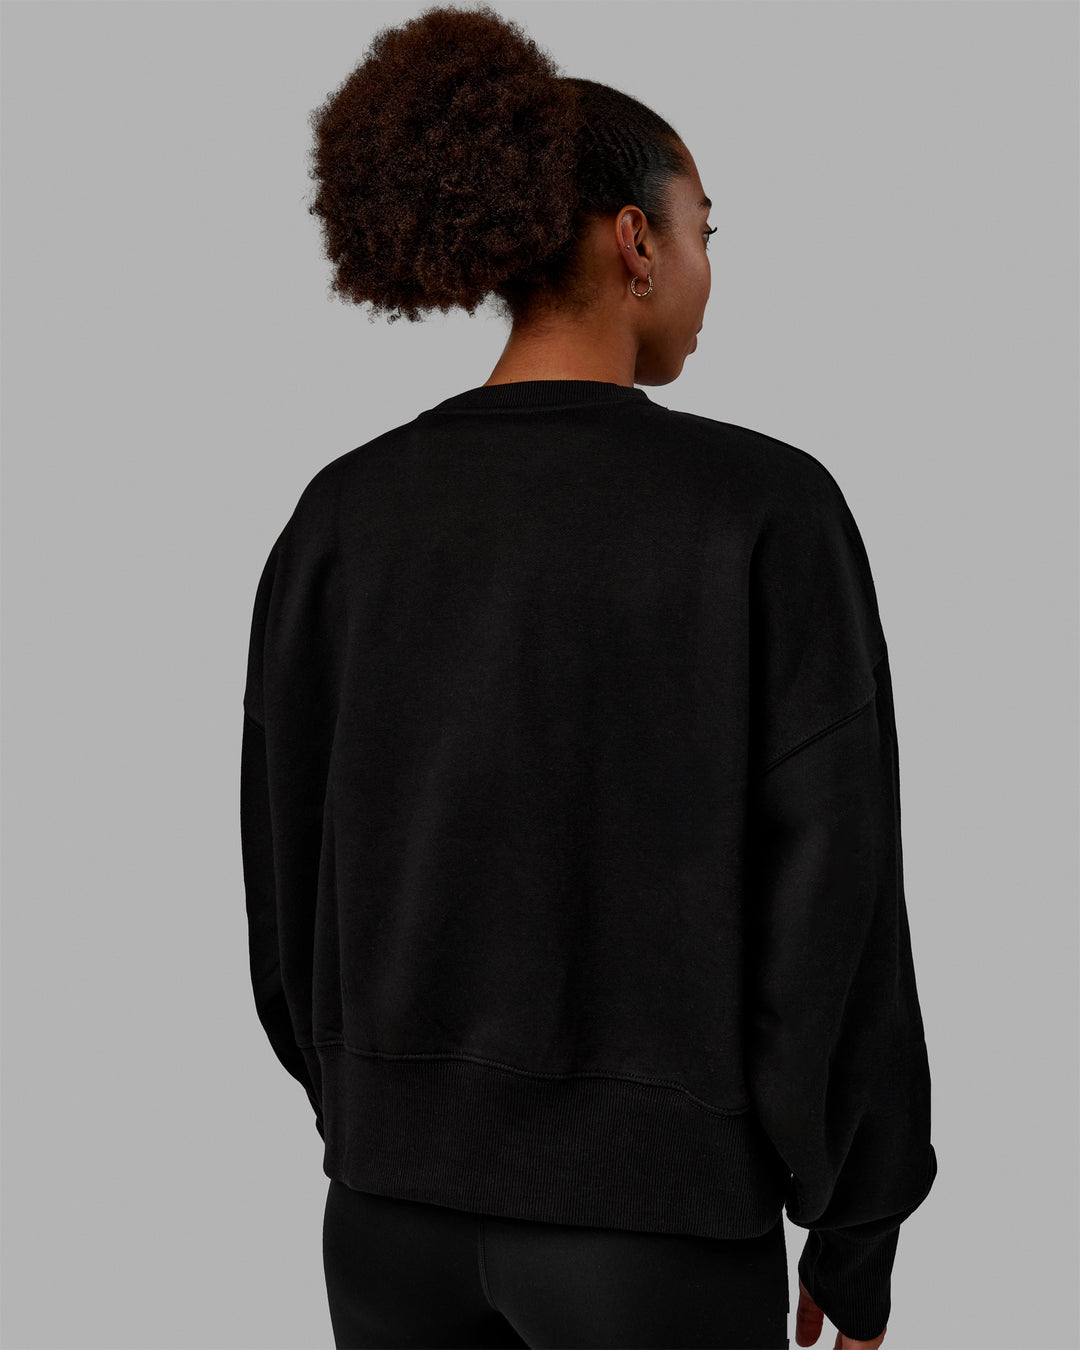 Woman wearing 1% Better Heavyweight Sweater - Black-White